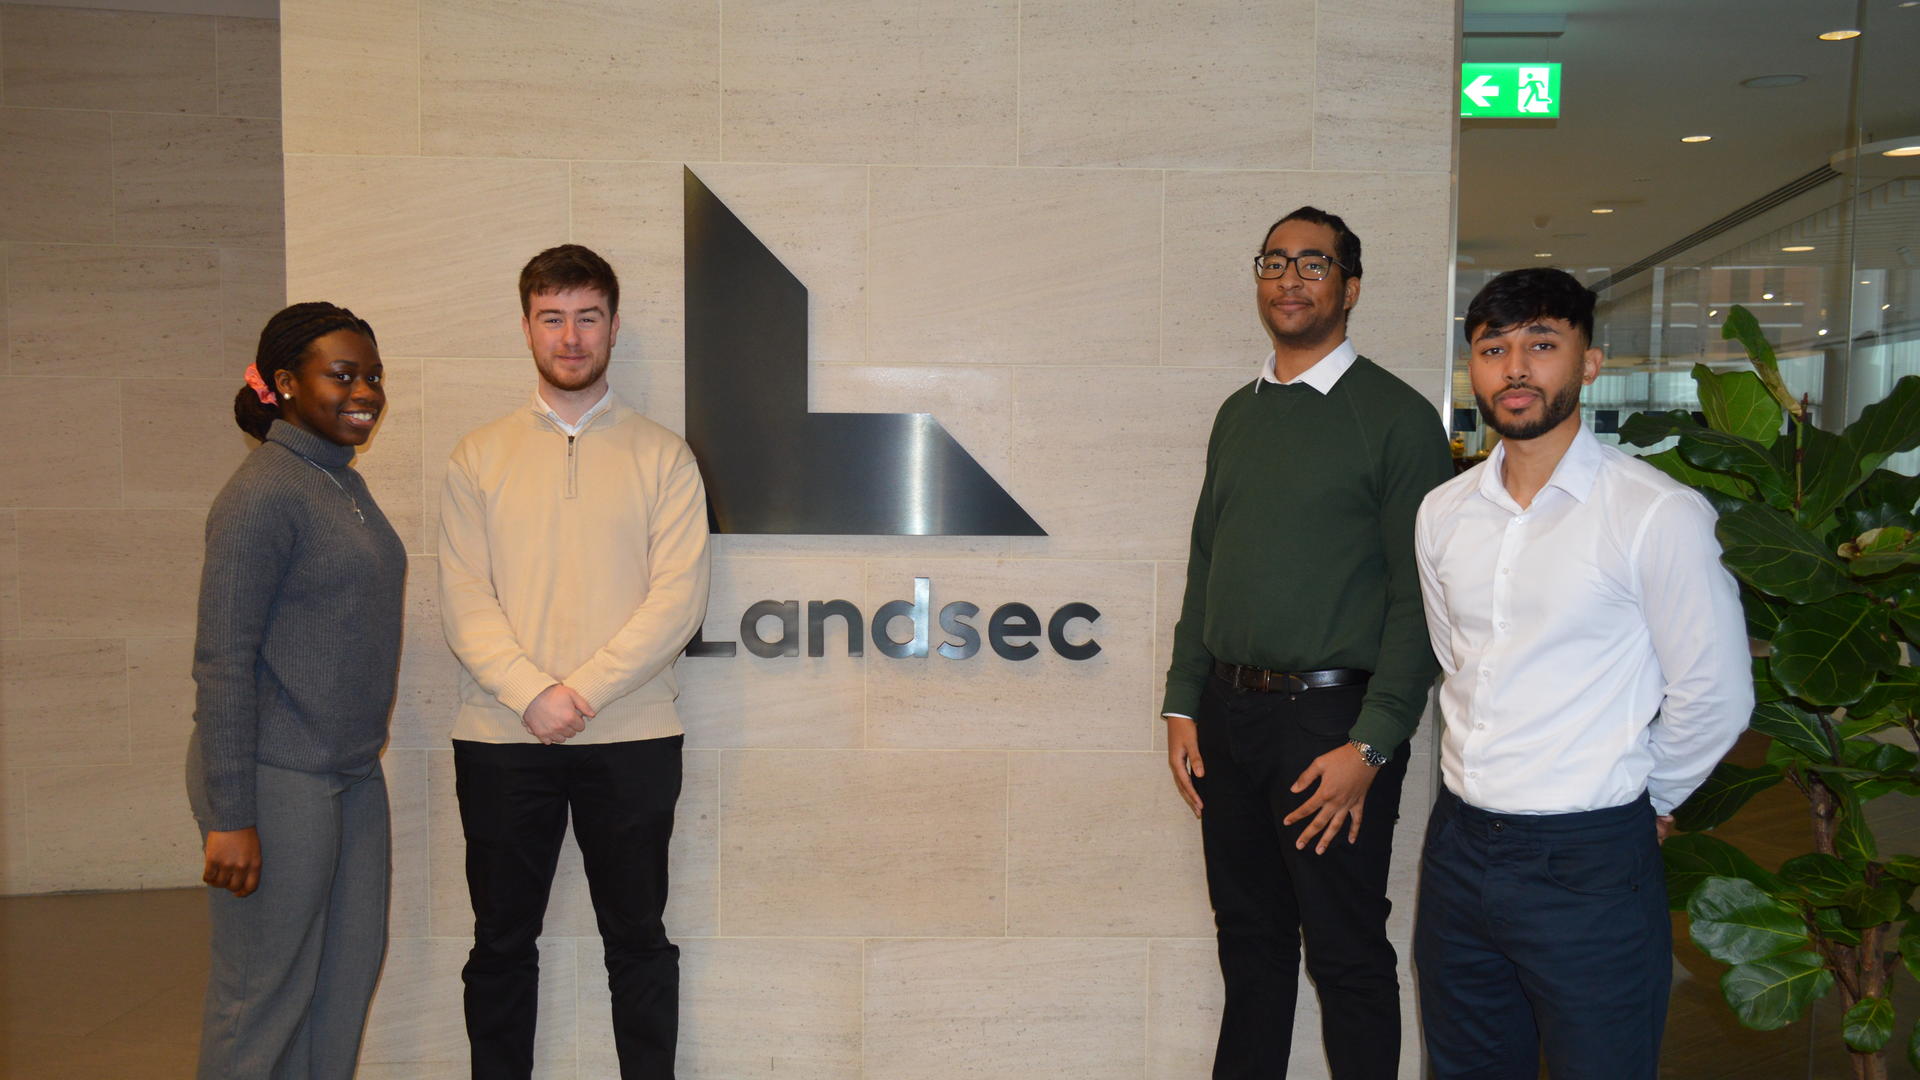 Landsec Futures interns